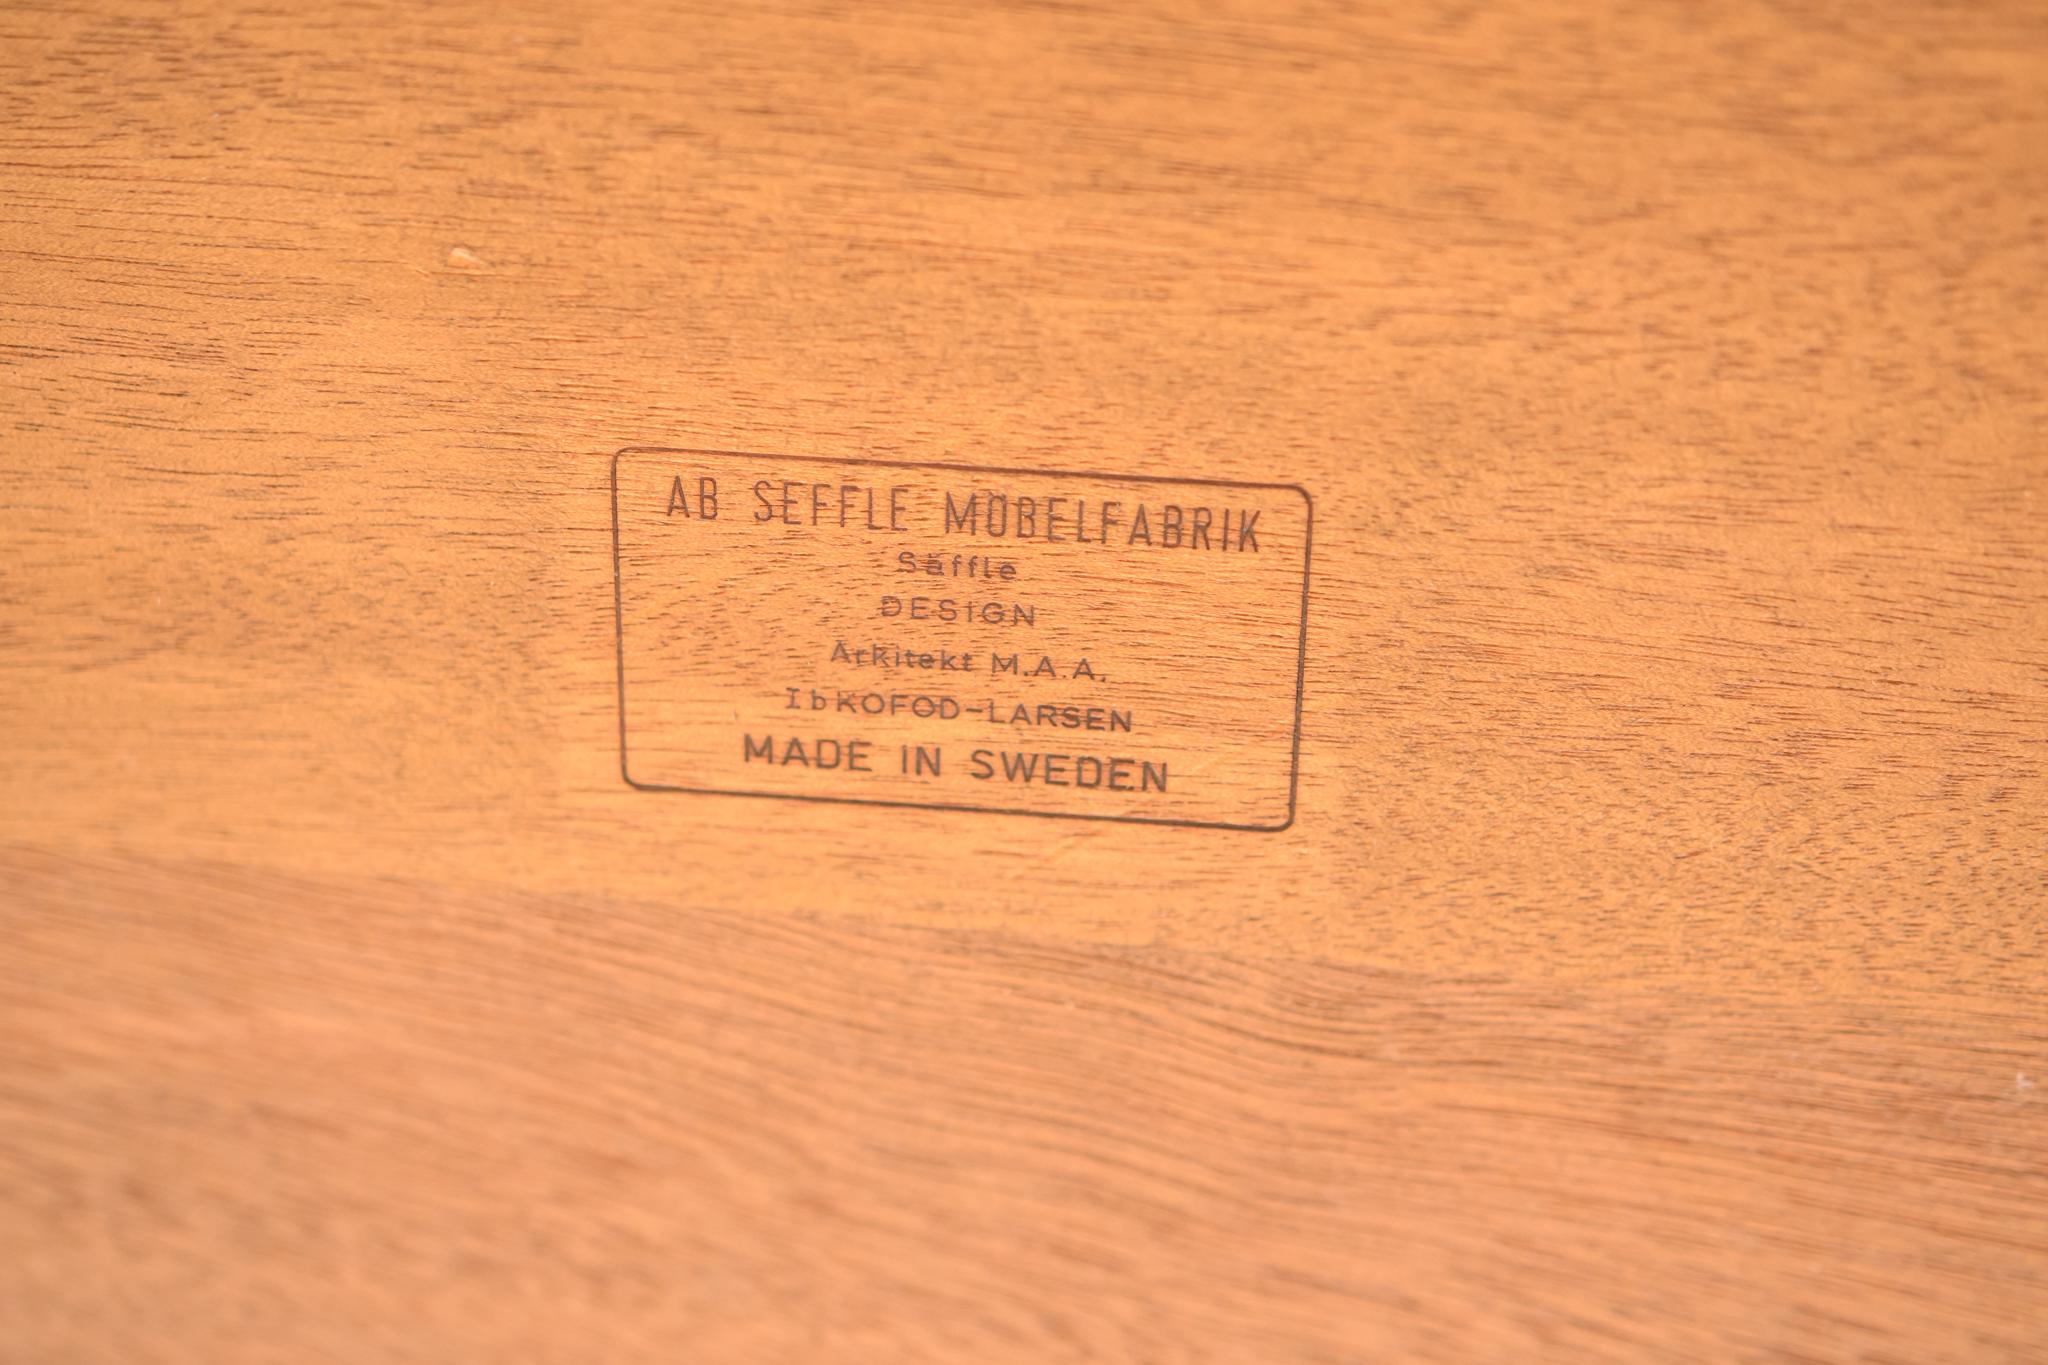 Mid-Century Teak Desk by I.B Kofod-Larsen for Seffle Möbelfabrik, Sweden, 1950s For Sale 13